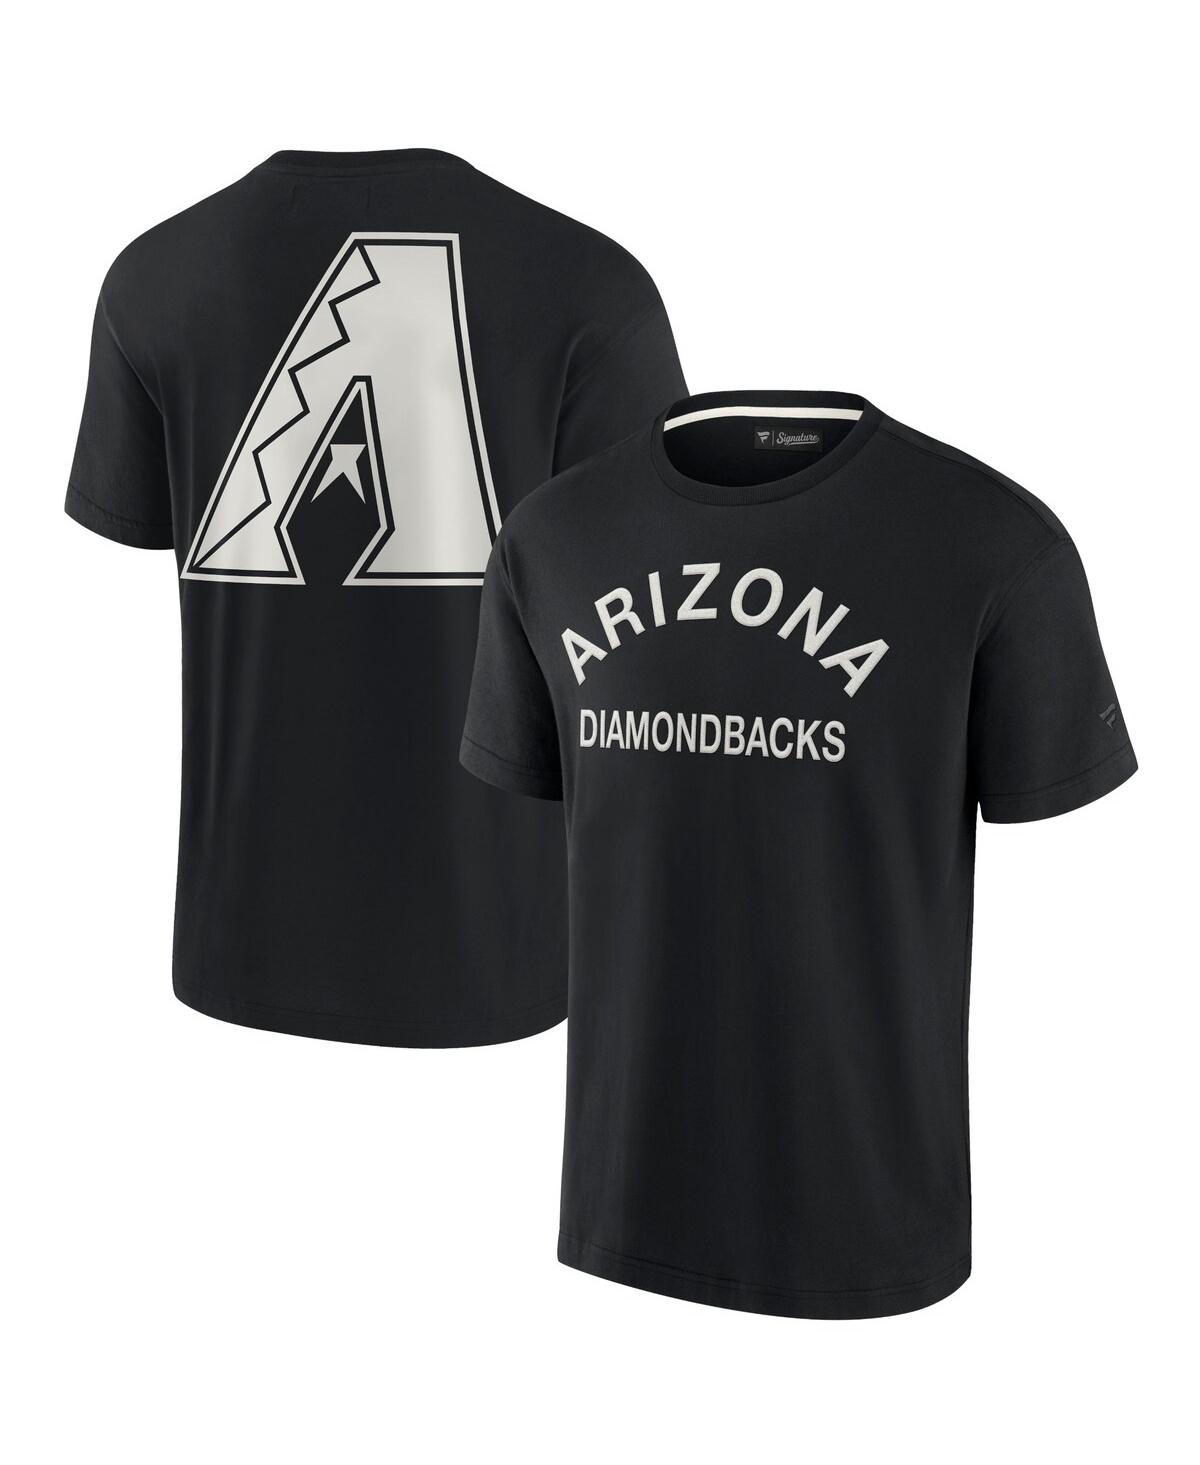 Men's and Women's Fanatics Signature Black Arizona Diamondbacks Super Soft Short Sleeve T-shirt - Black